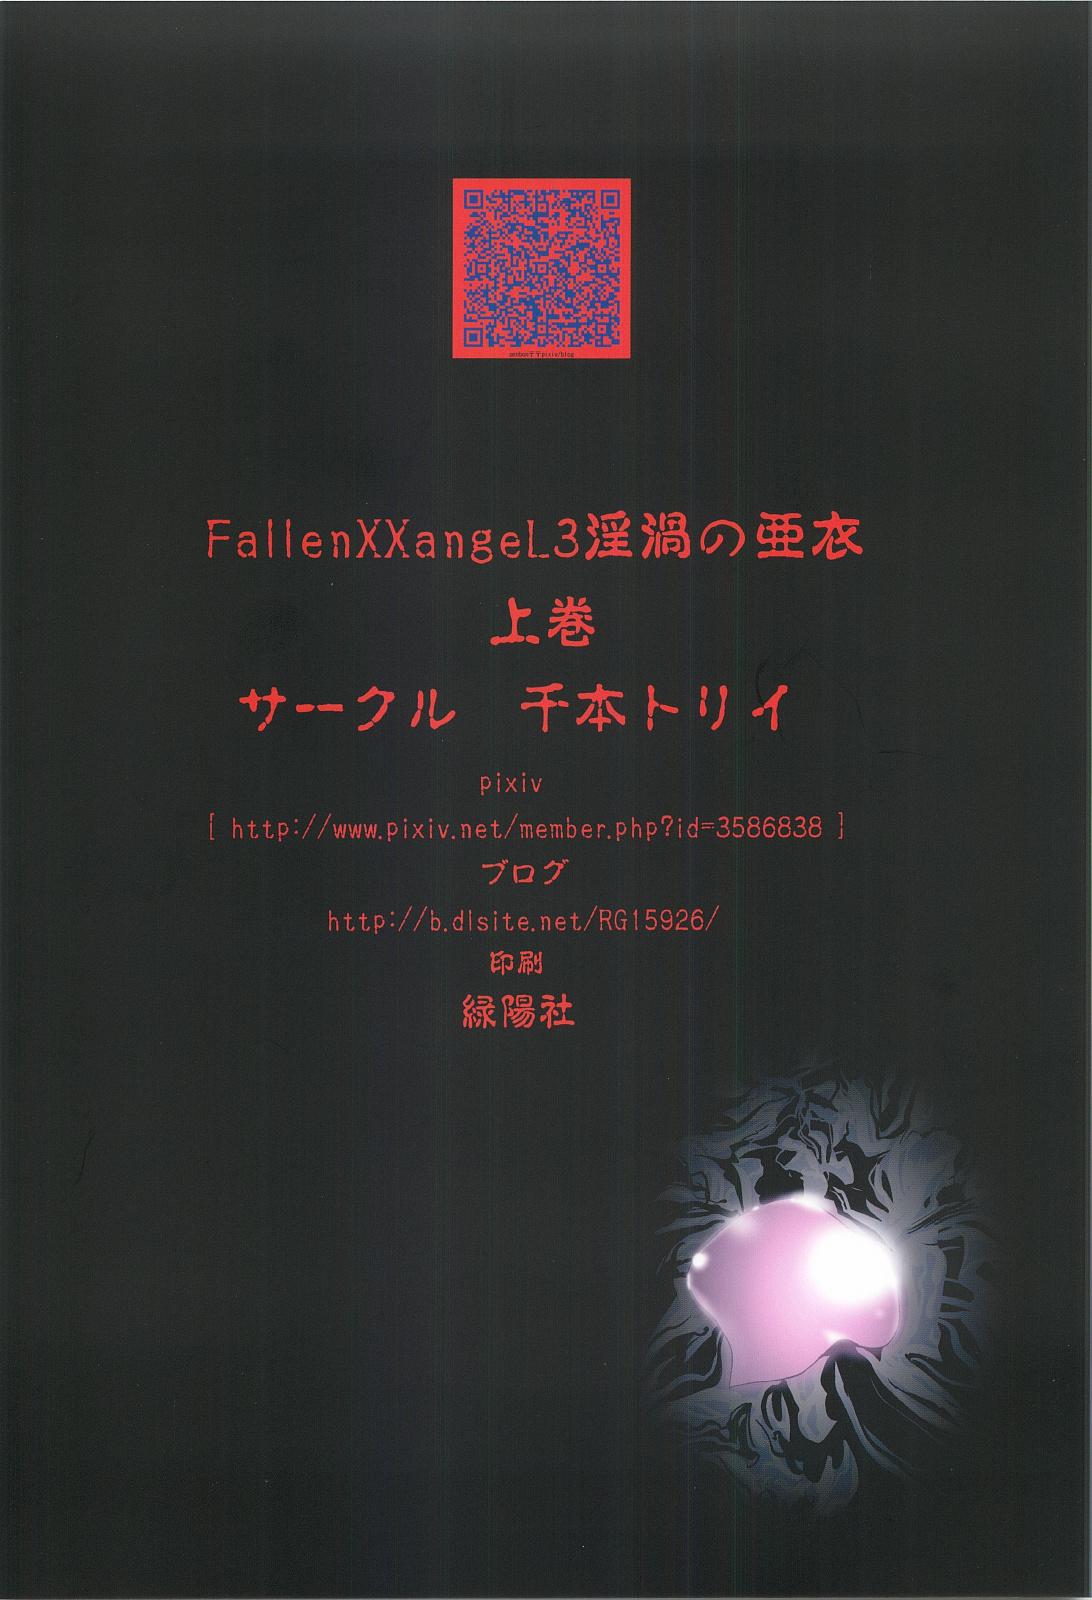 FallenXXangeL3 Inka no Ai Joukan 33